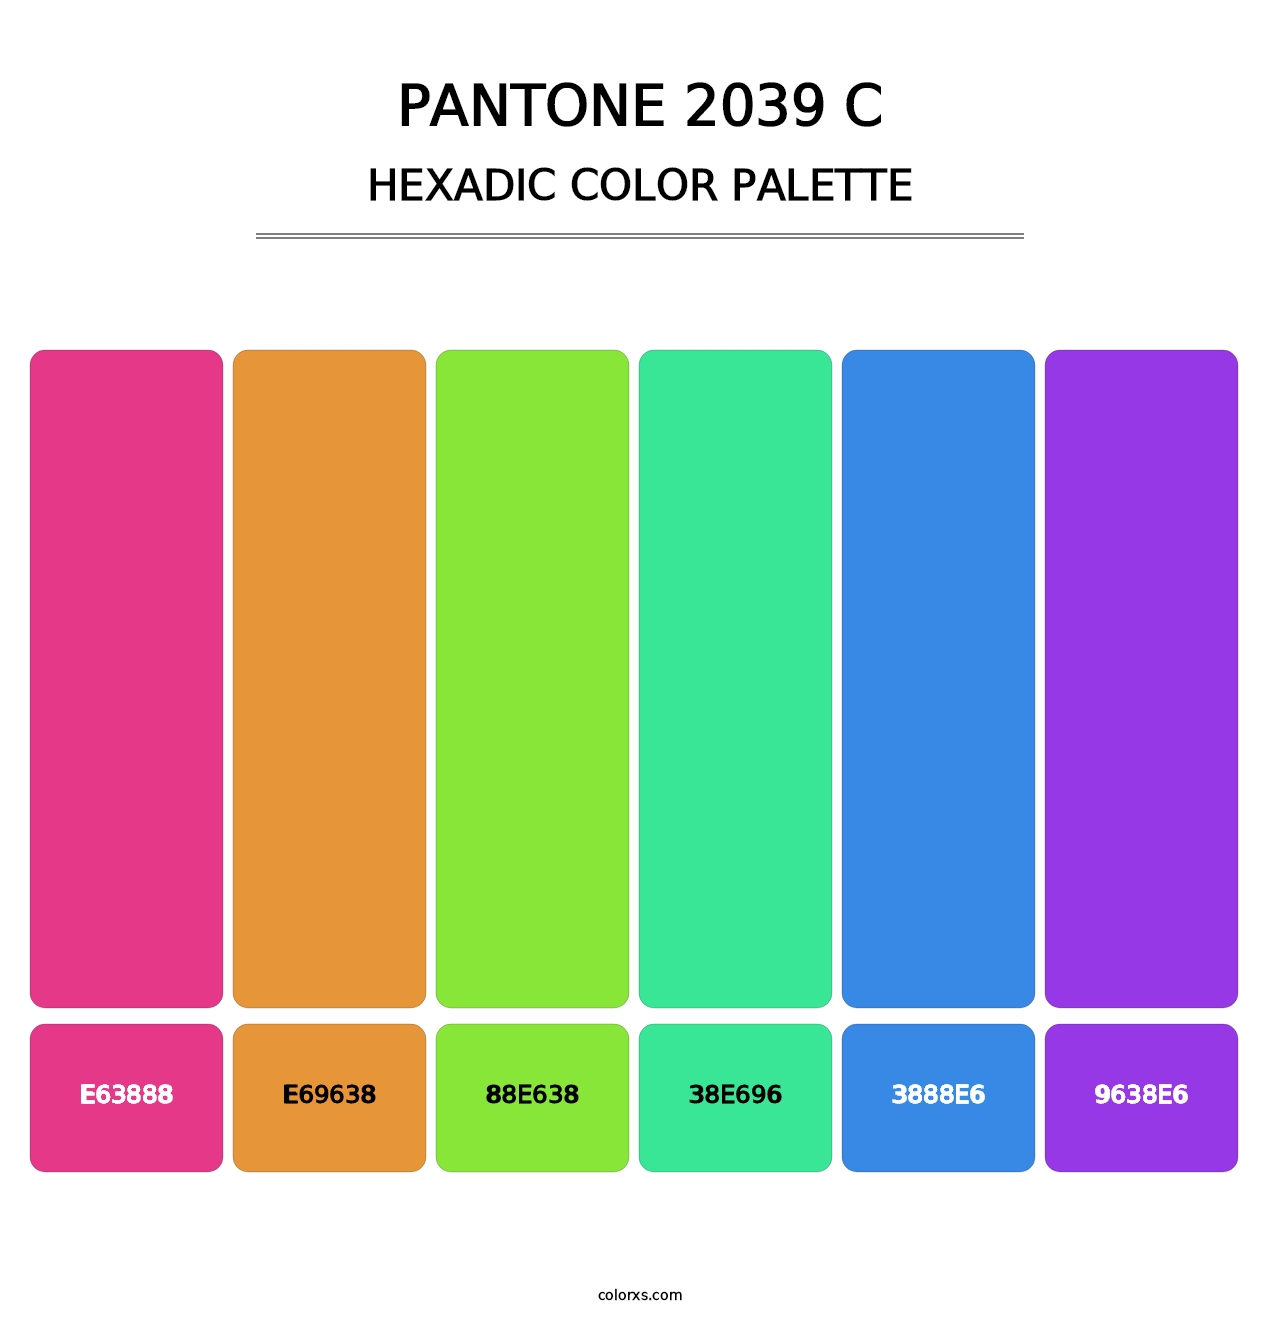 PANTONE 2039 C - Hexadic Color Palette